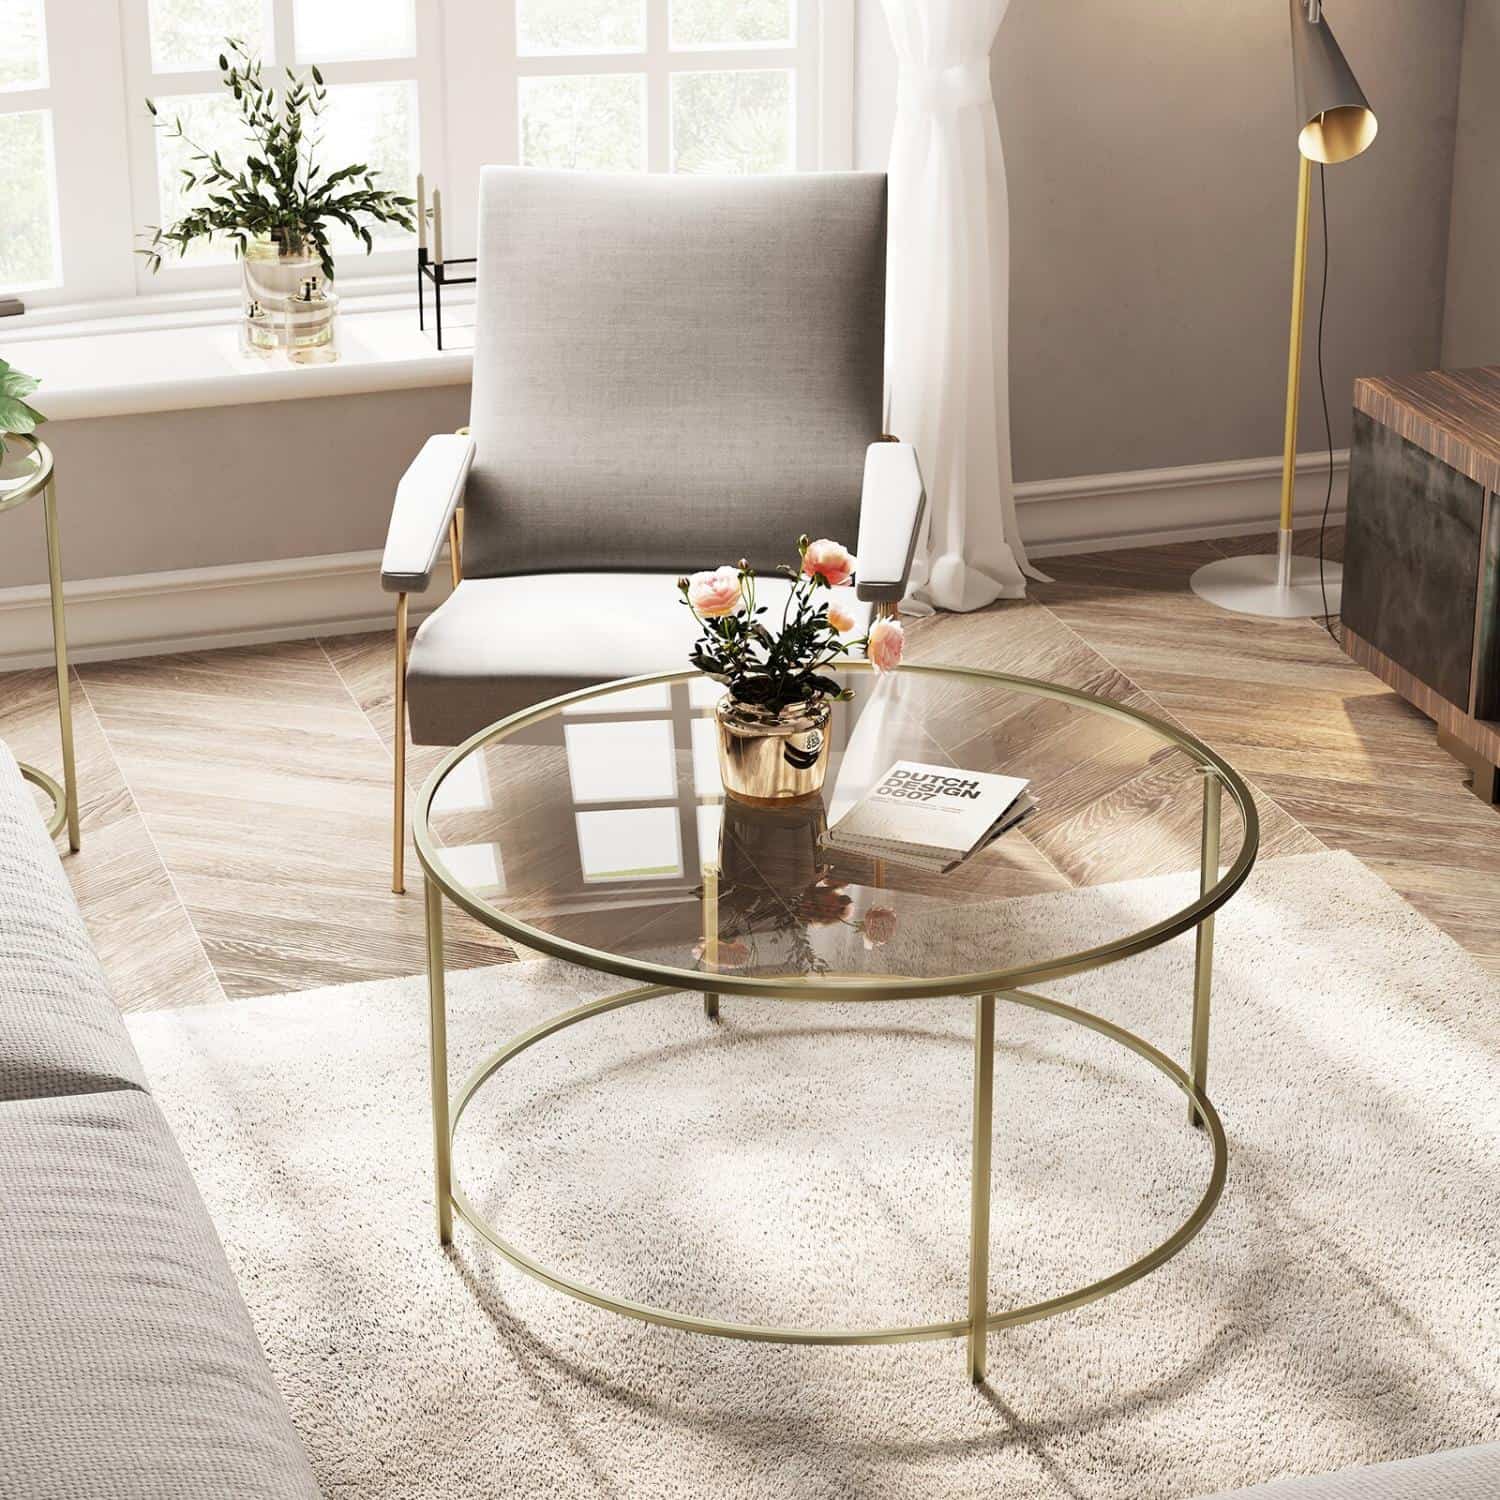 sleek round glass centre piece with gold imitation, flower arrangement, grey sofa, carpet, floor, reading lamp in the corner